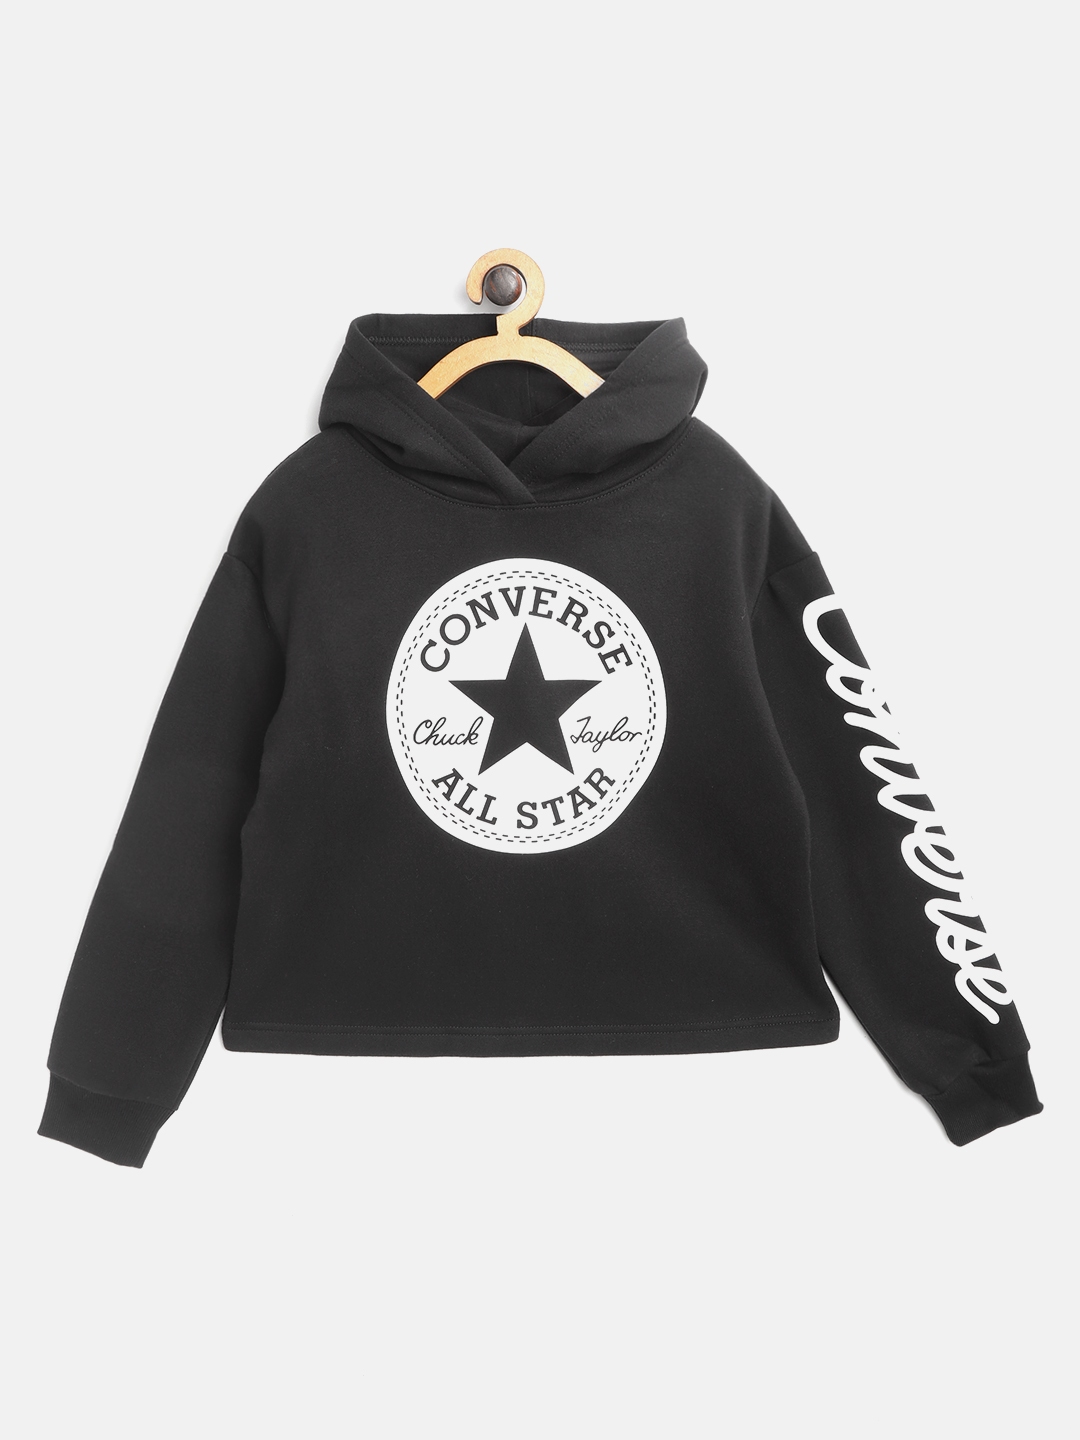 Buy Converse Girls Black & White Brand Logo Print Crop Hooded ...